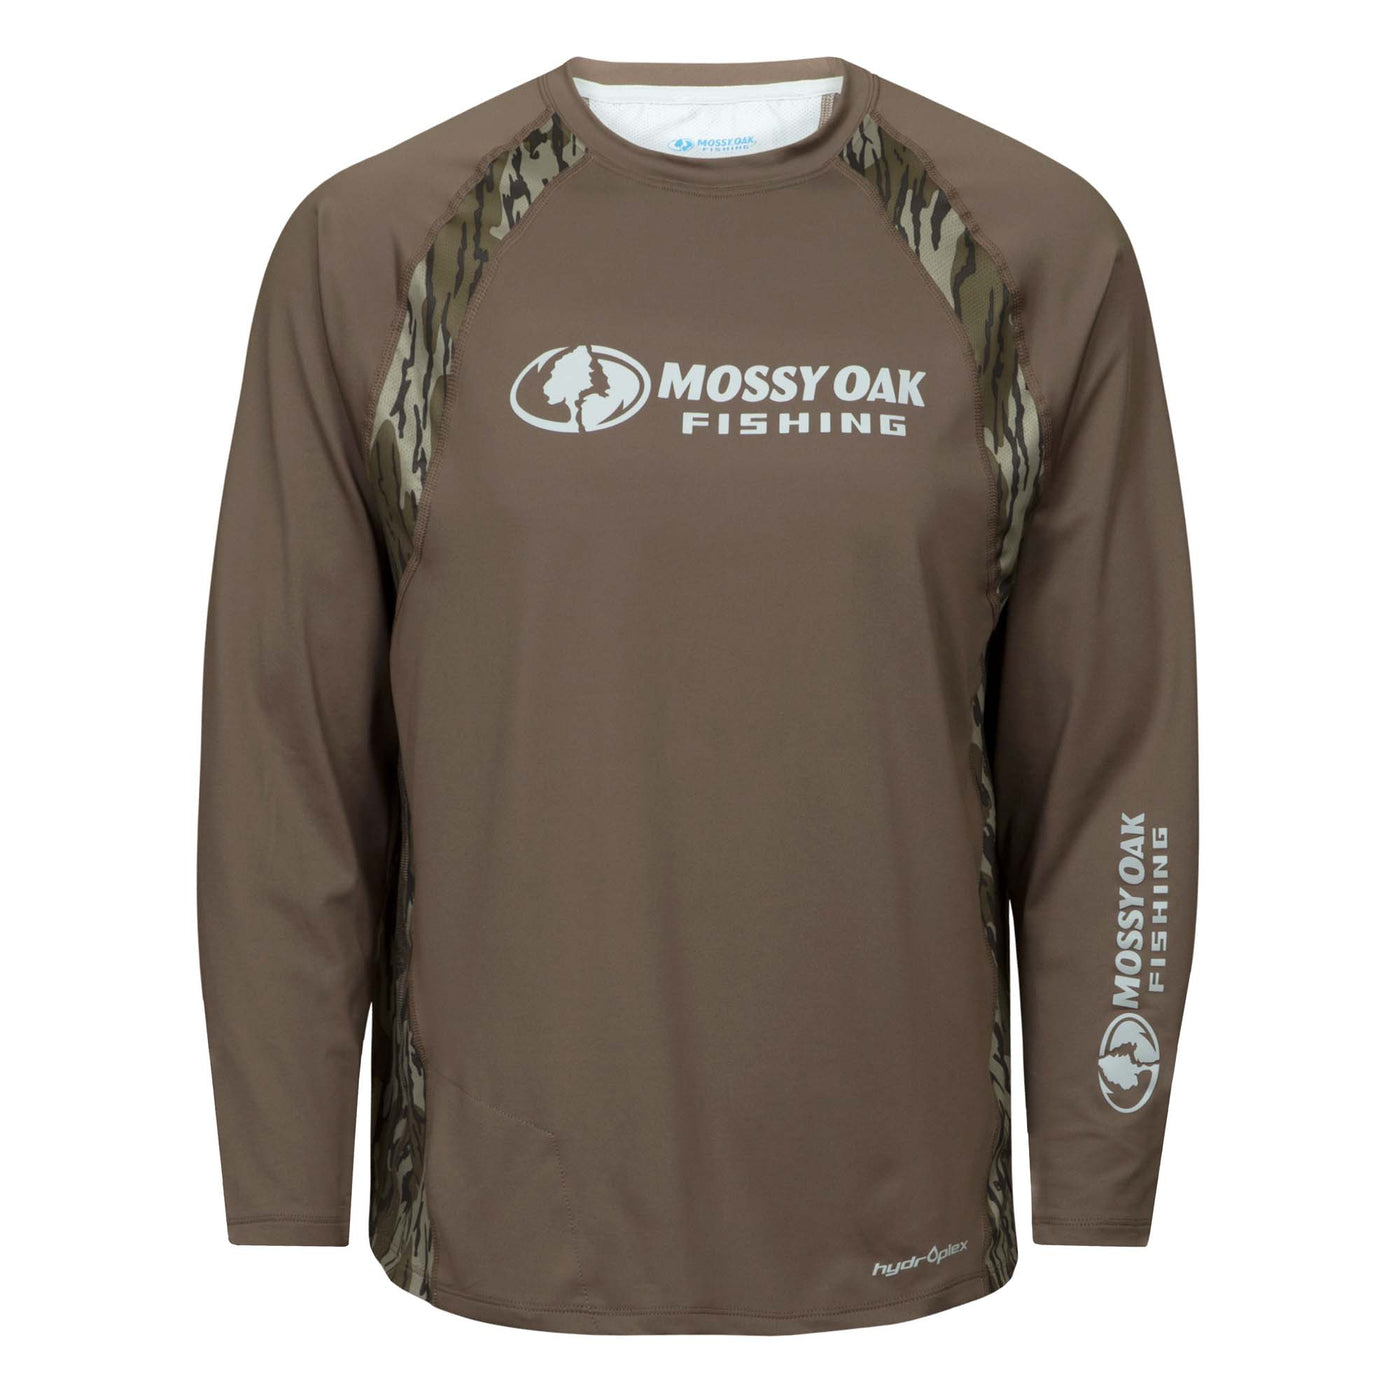 Mossy Oak Men's Fishing Shirts Long Sleeve with Palestine